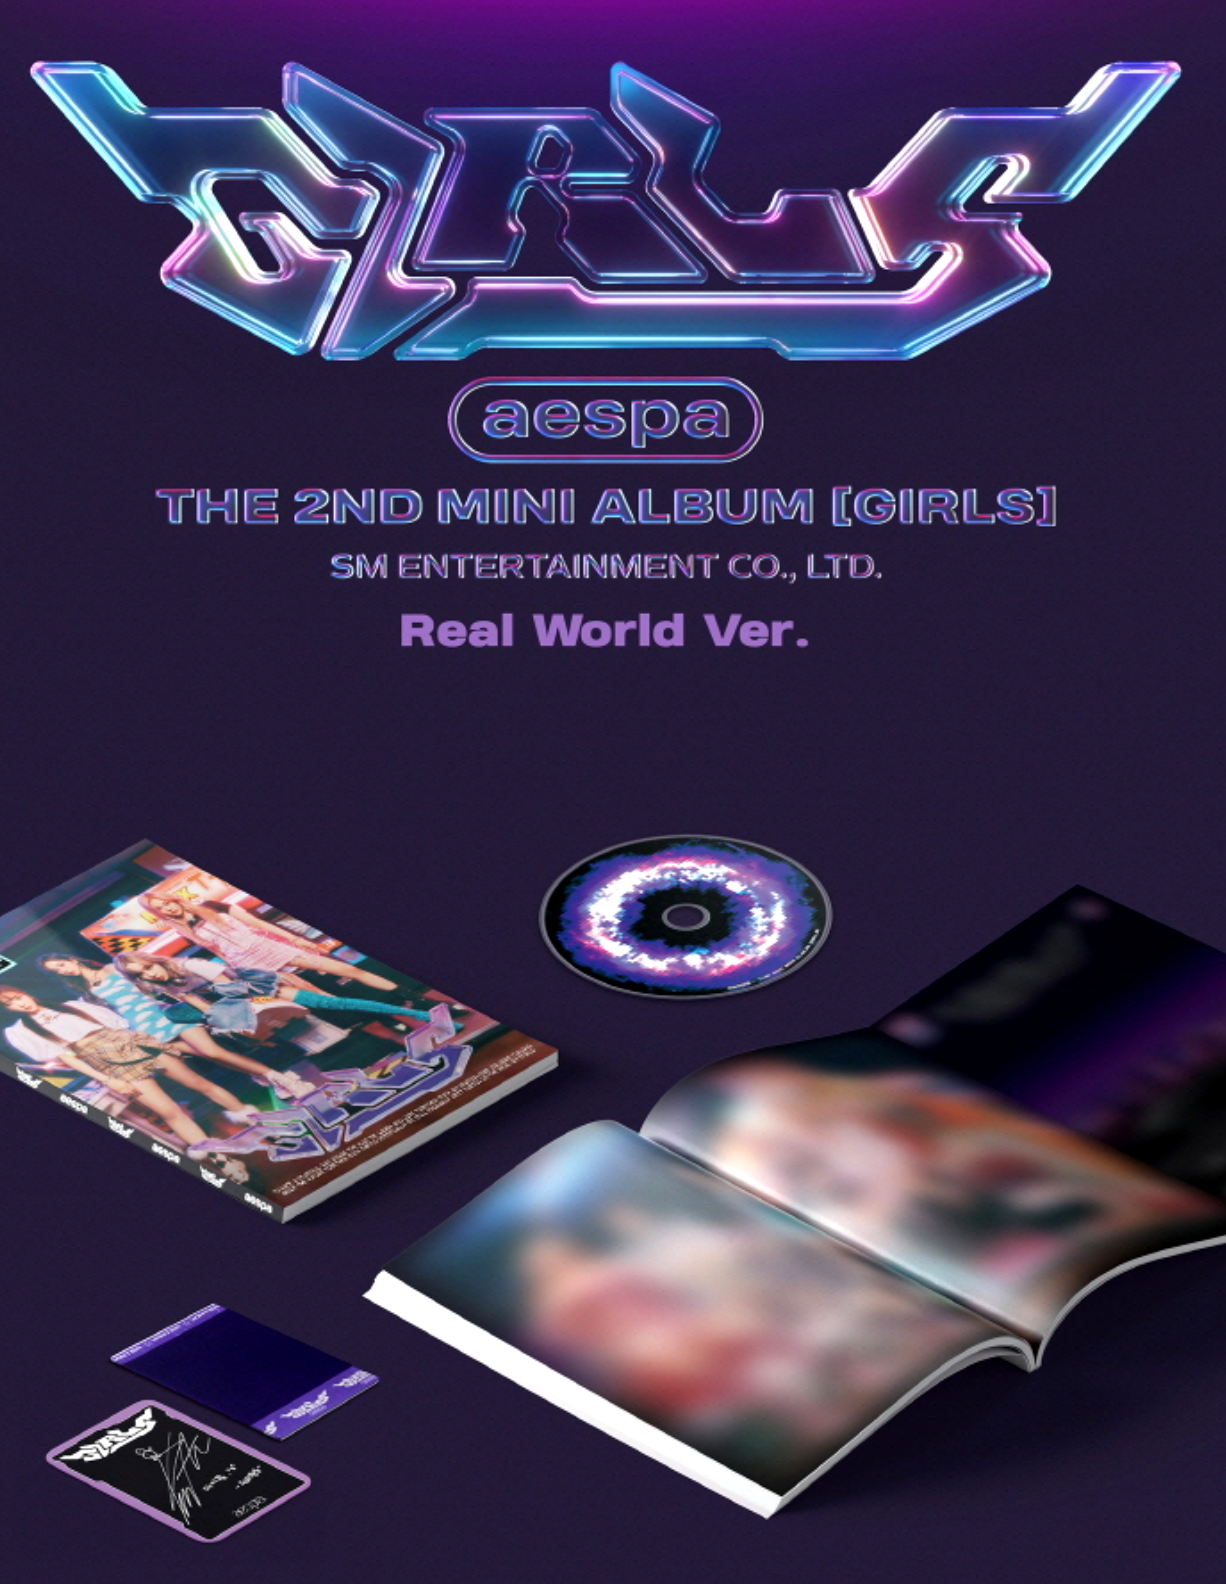 aespa 2nd Mini Album "GIRLS"